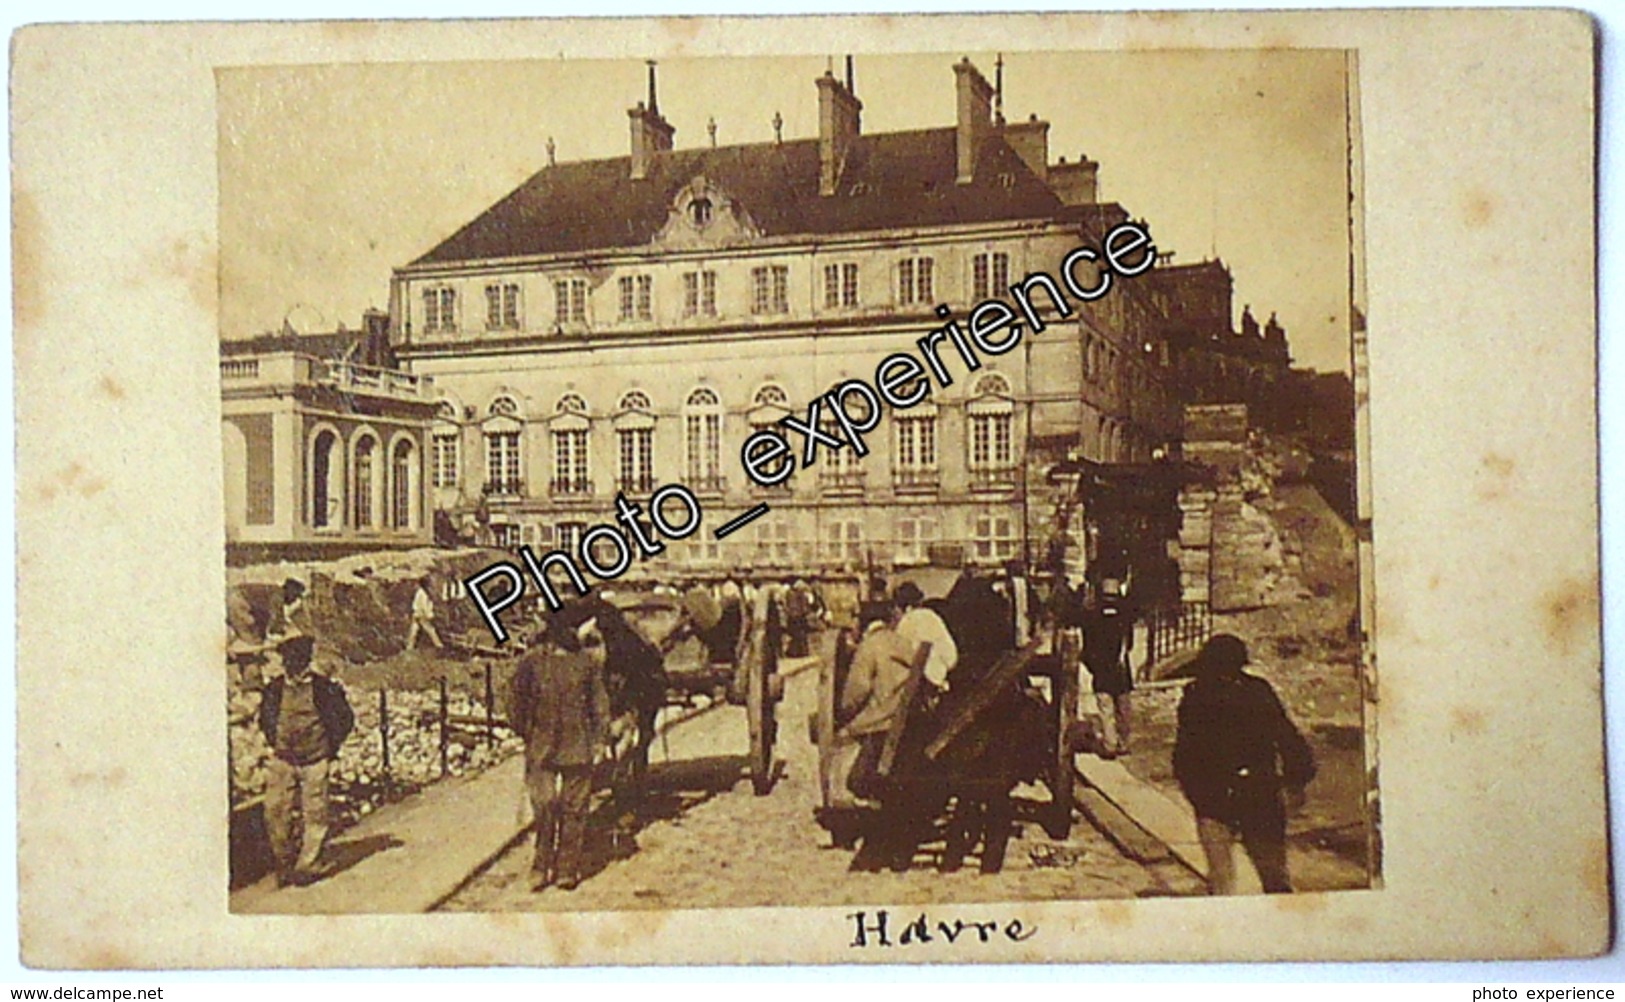 Photo Cdv XIX Chantier Architecture 1860 1870 LE HAVRE Seine Maritime 76 Normandie - Old (before 1900)